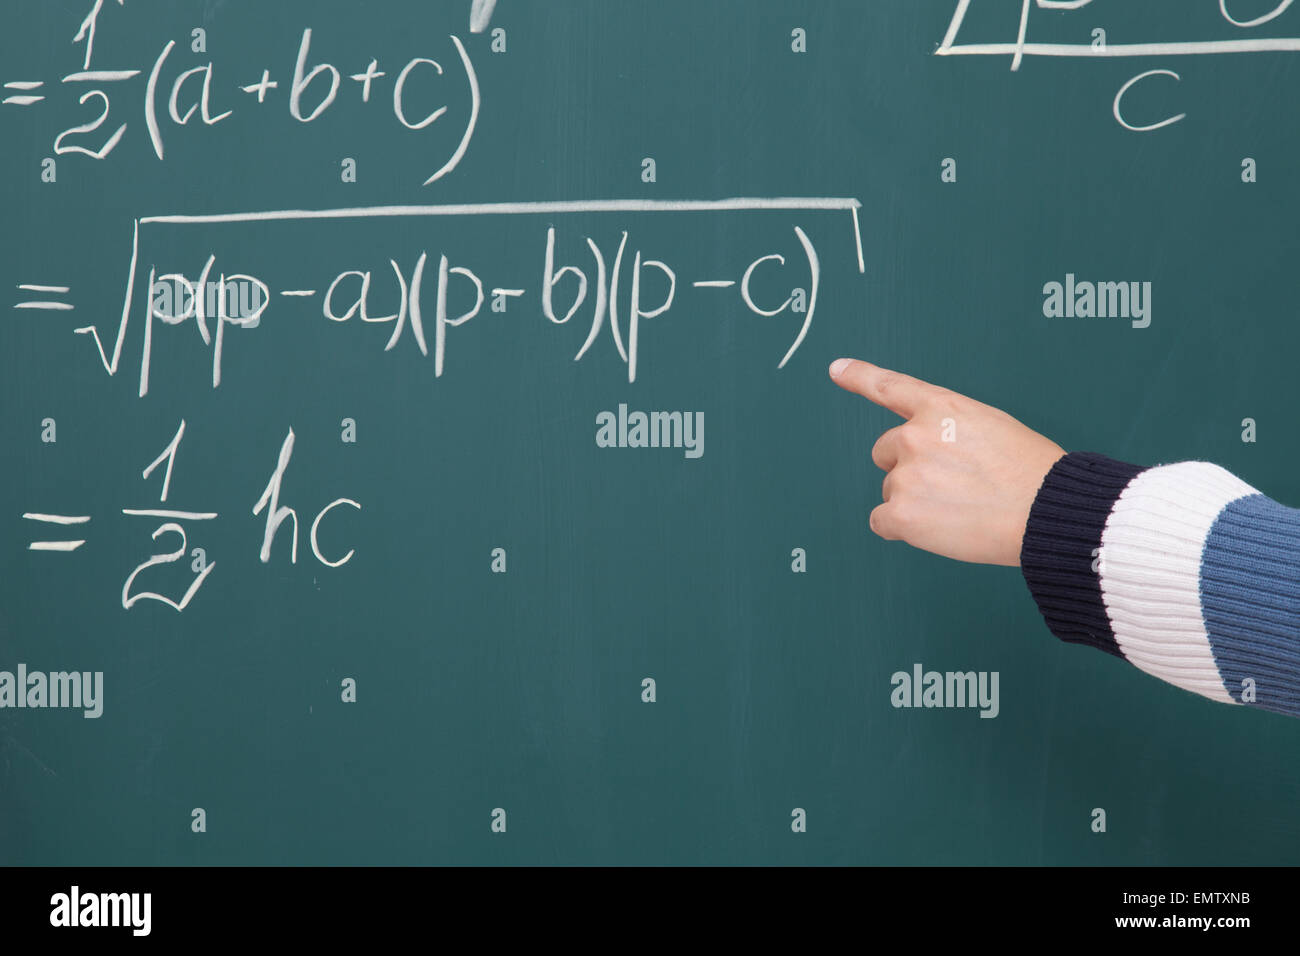 Trainee solve math problems written in chalk on the blackboard Stock Photo